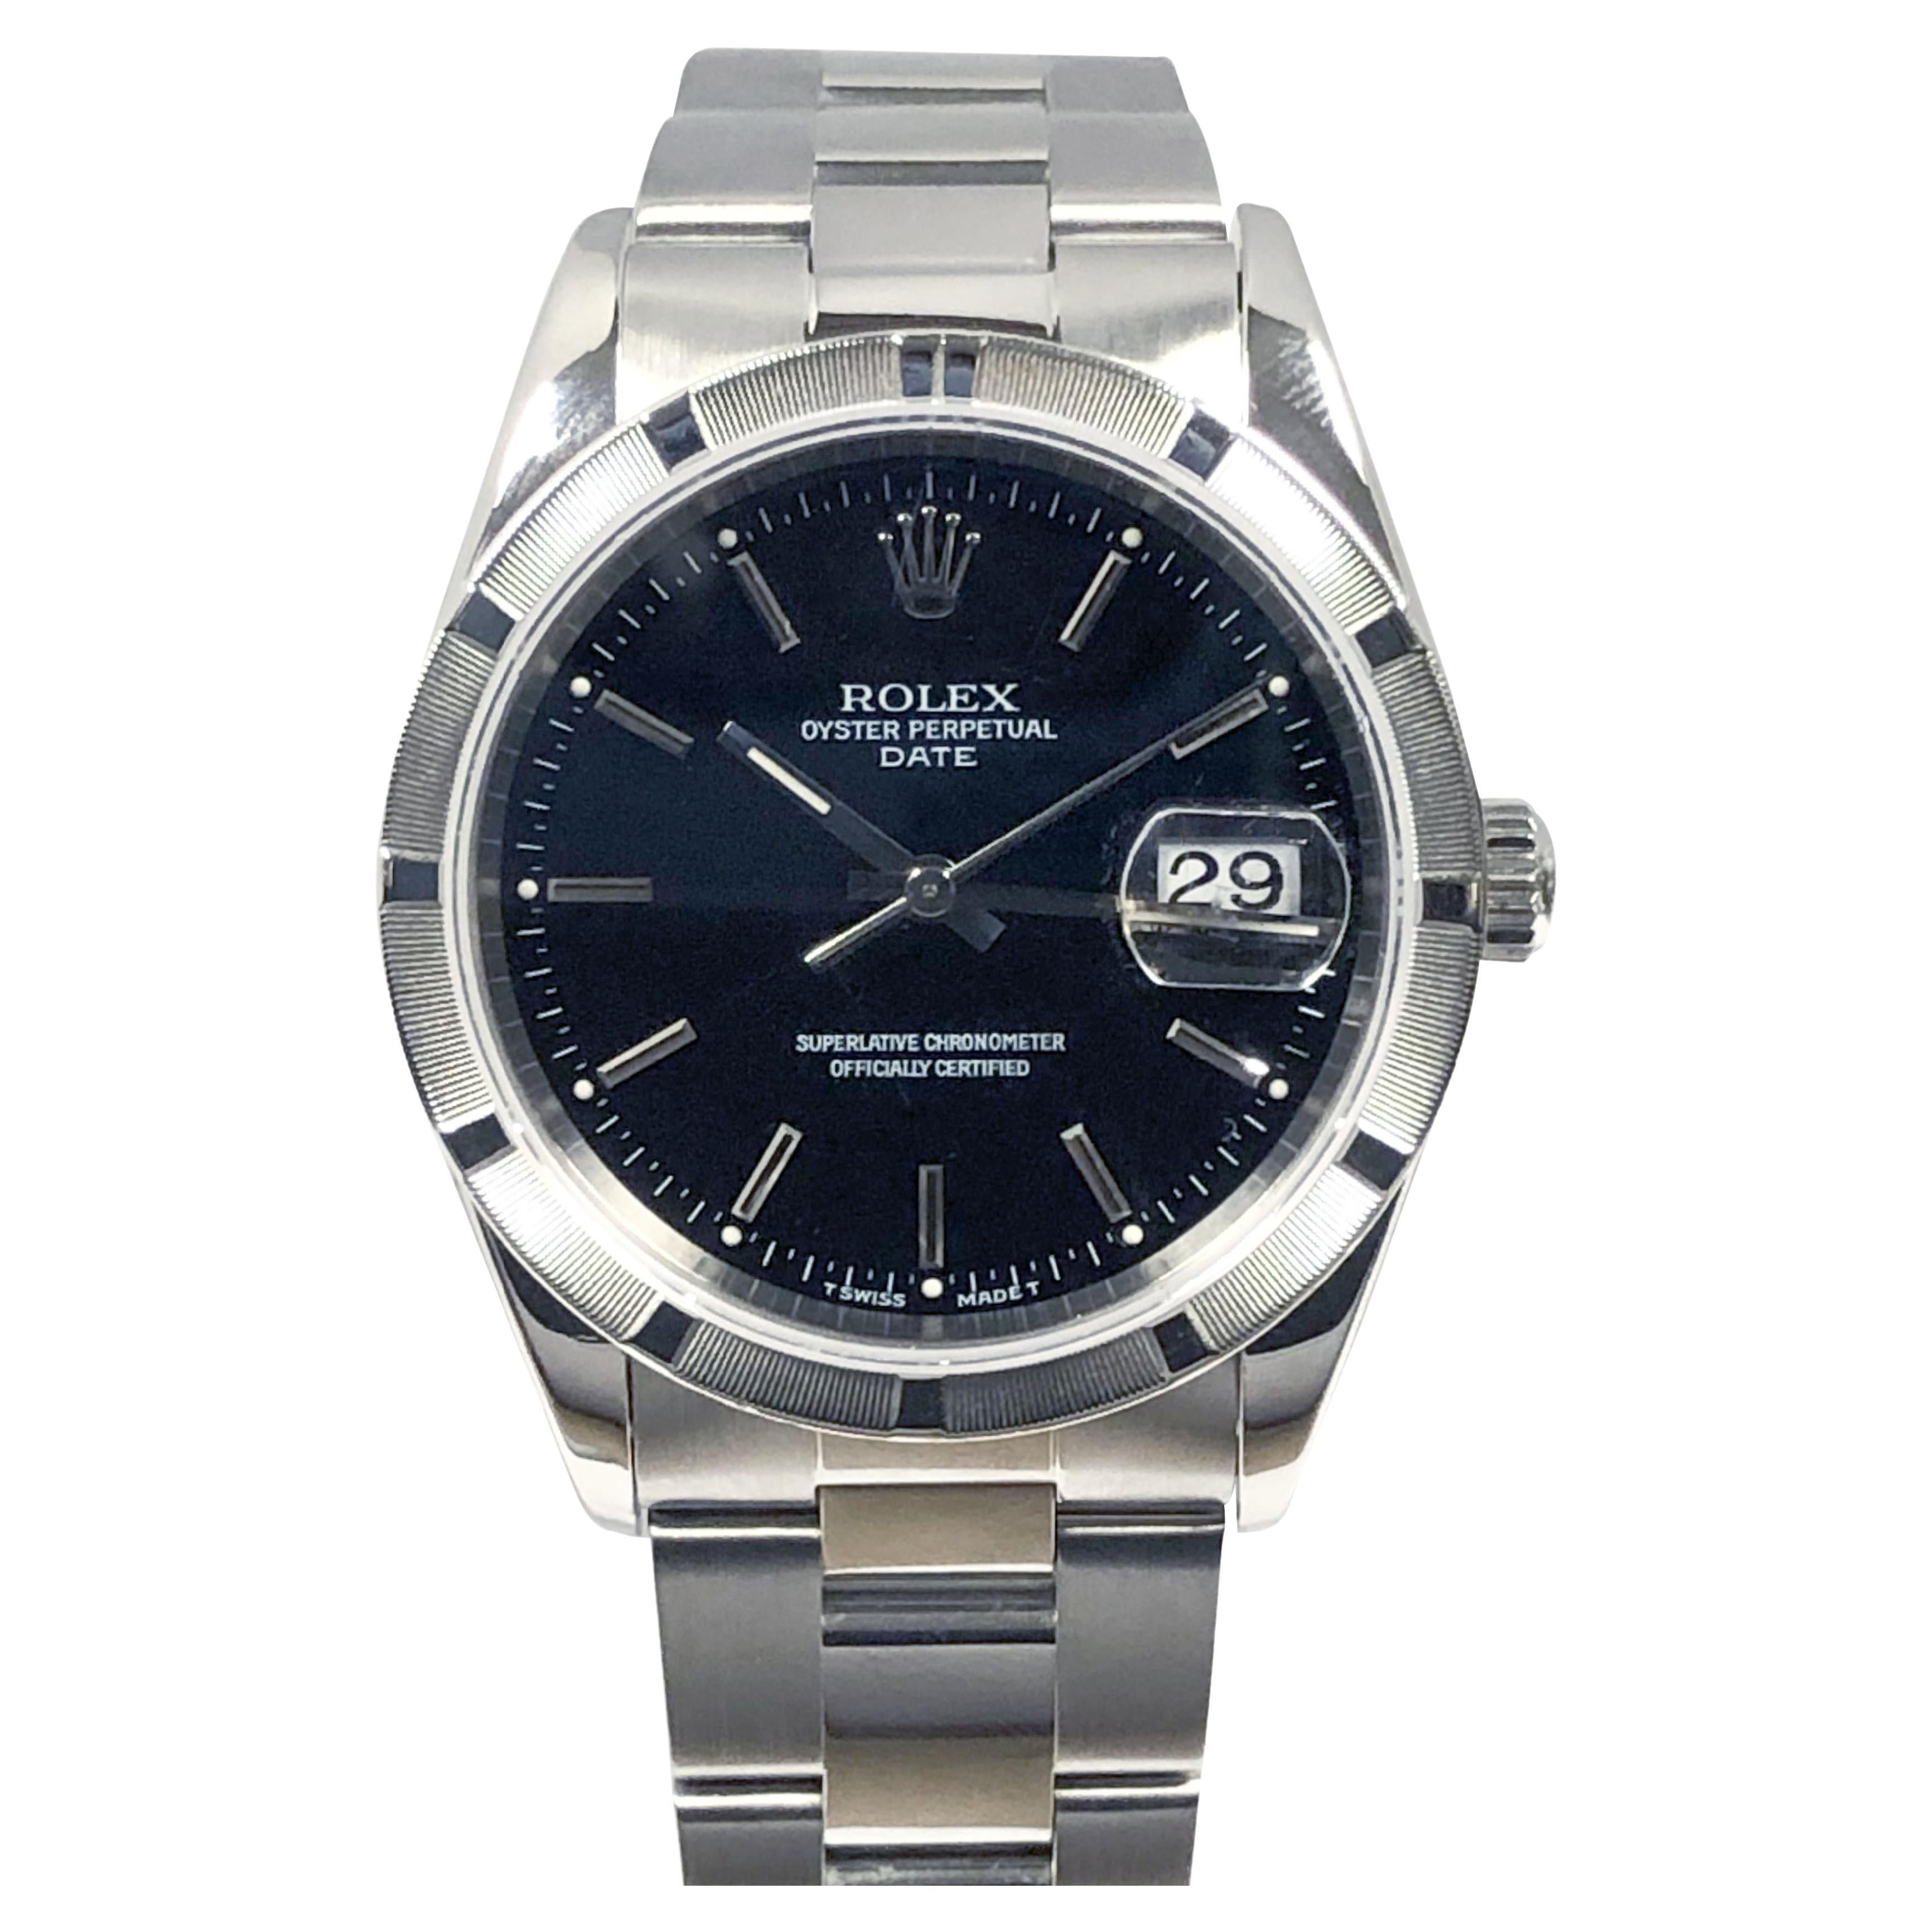 Rolex 2000 Midsize Date Ref 15210 Stainless Steel Wrist Watch For Sale